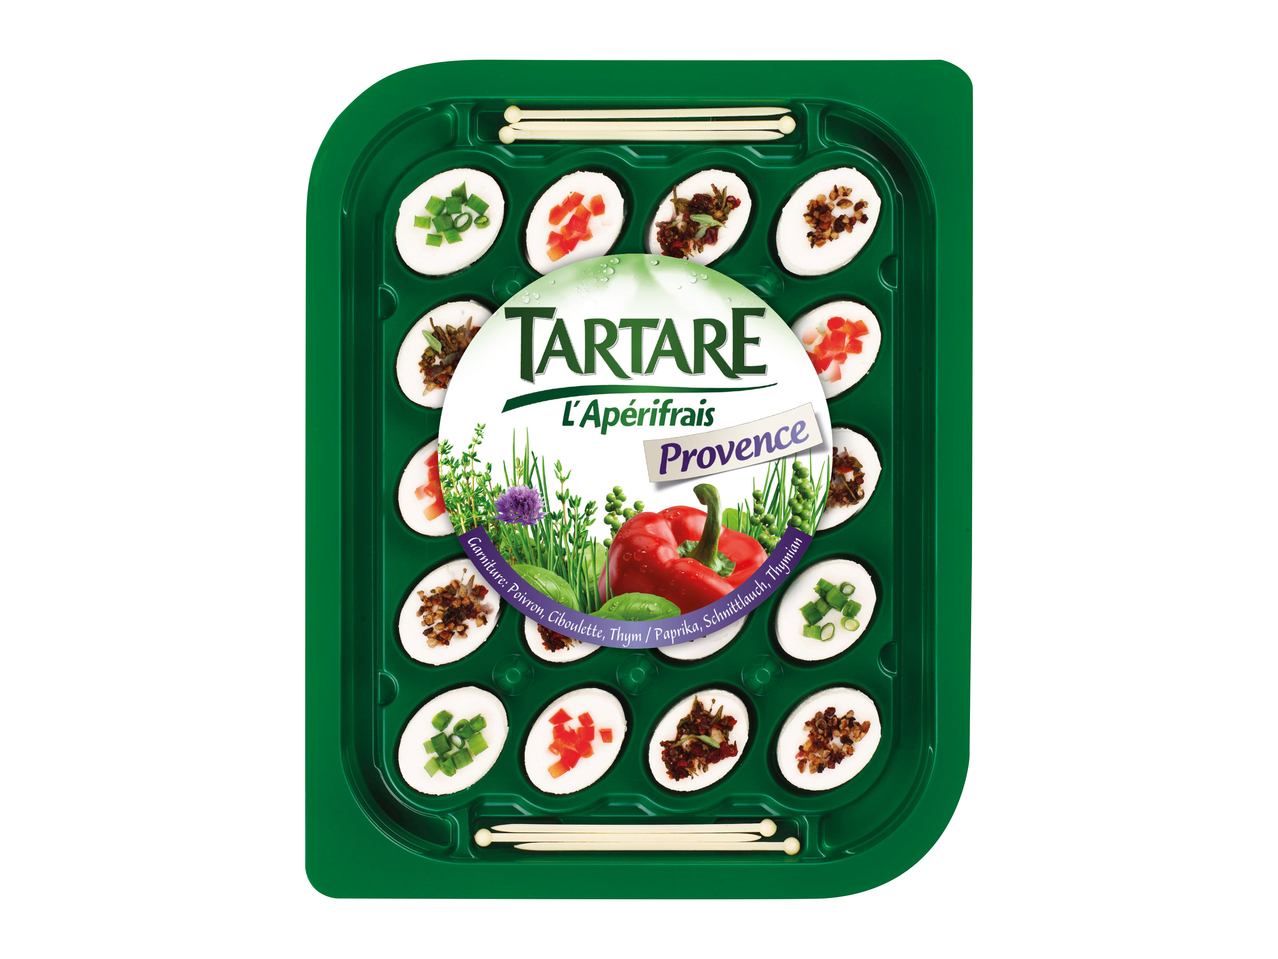 Tartare L'Apérifrais Provenza/ Italia